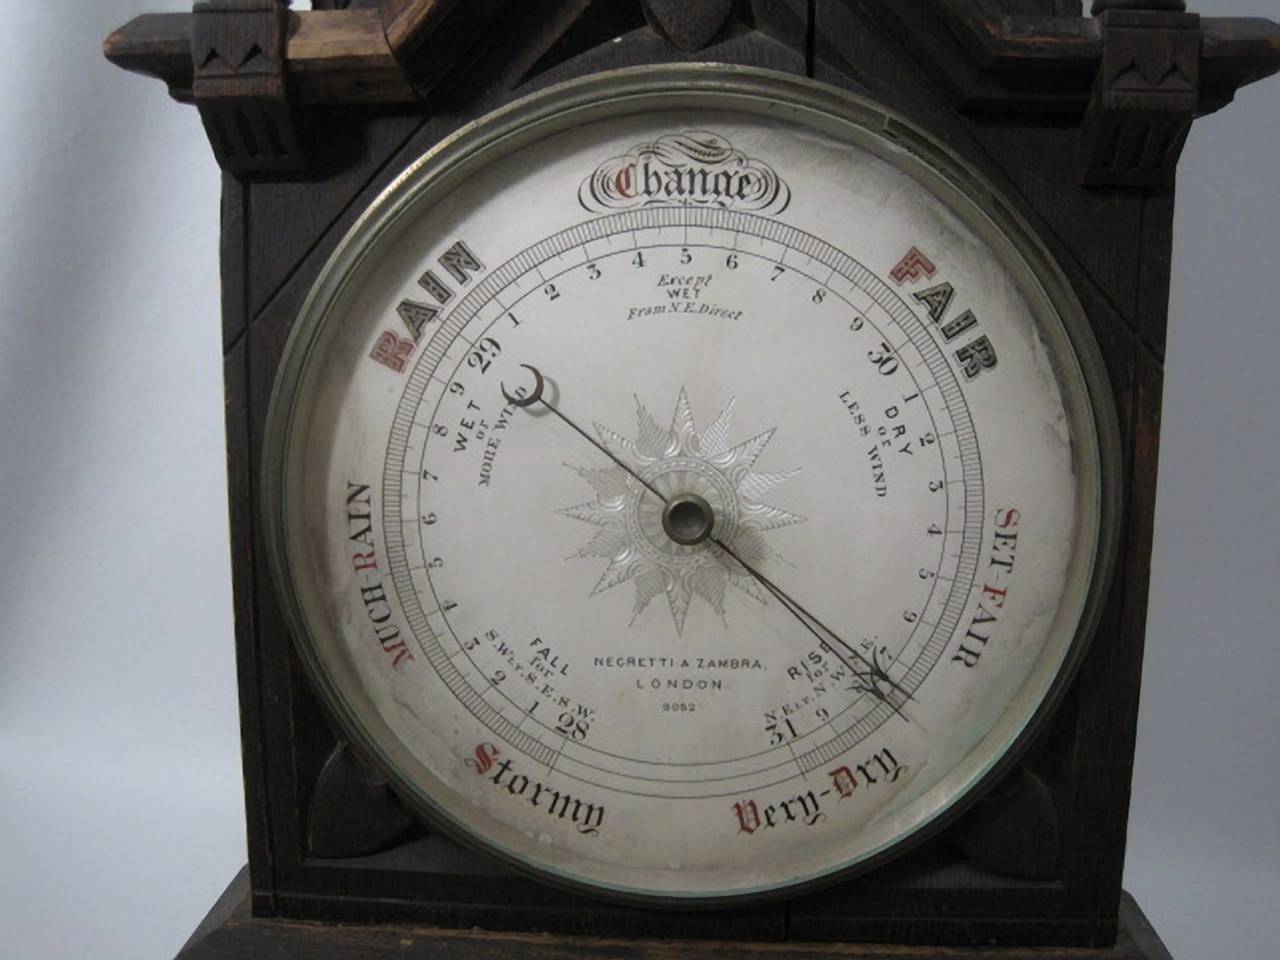 19th century Negretti & Zambra aneroid barometer.

Large English oak, Gothic style barometer.

Free shipping within the United States and Canada.